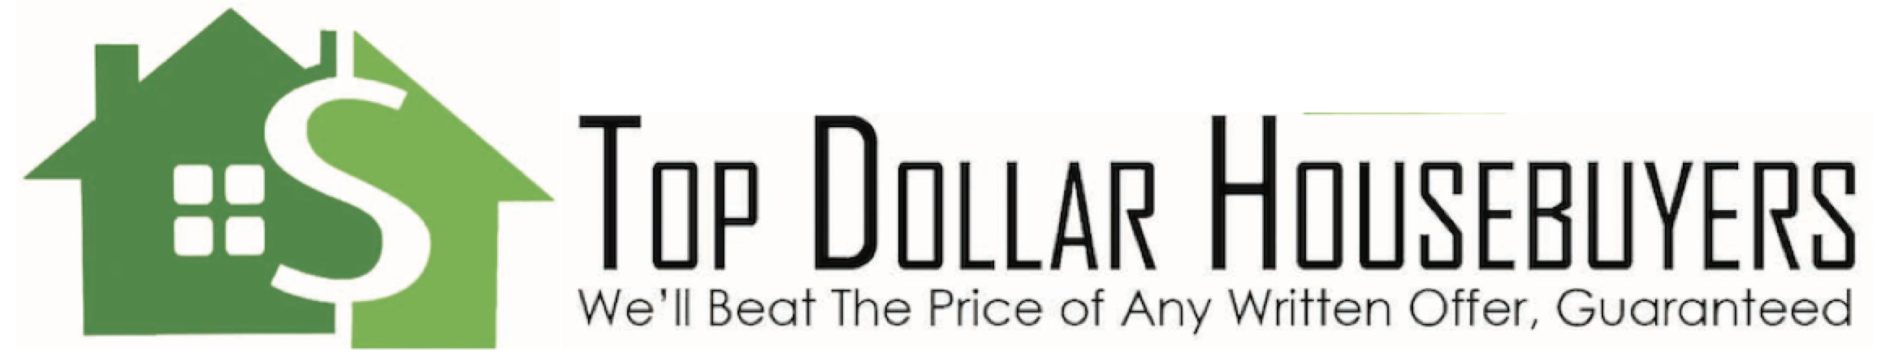 Top Dollar Housebuyers  logo